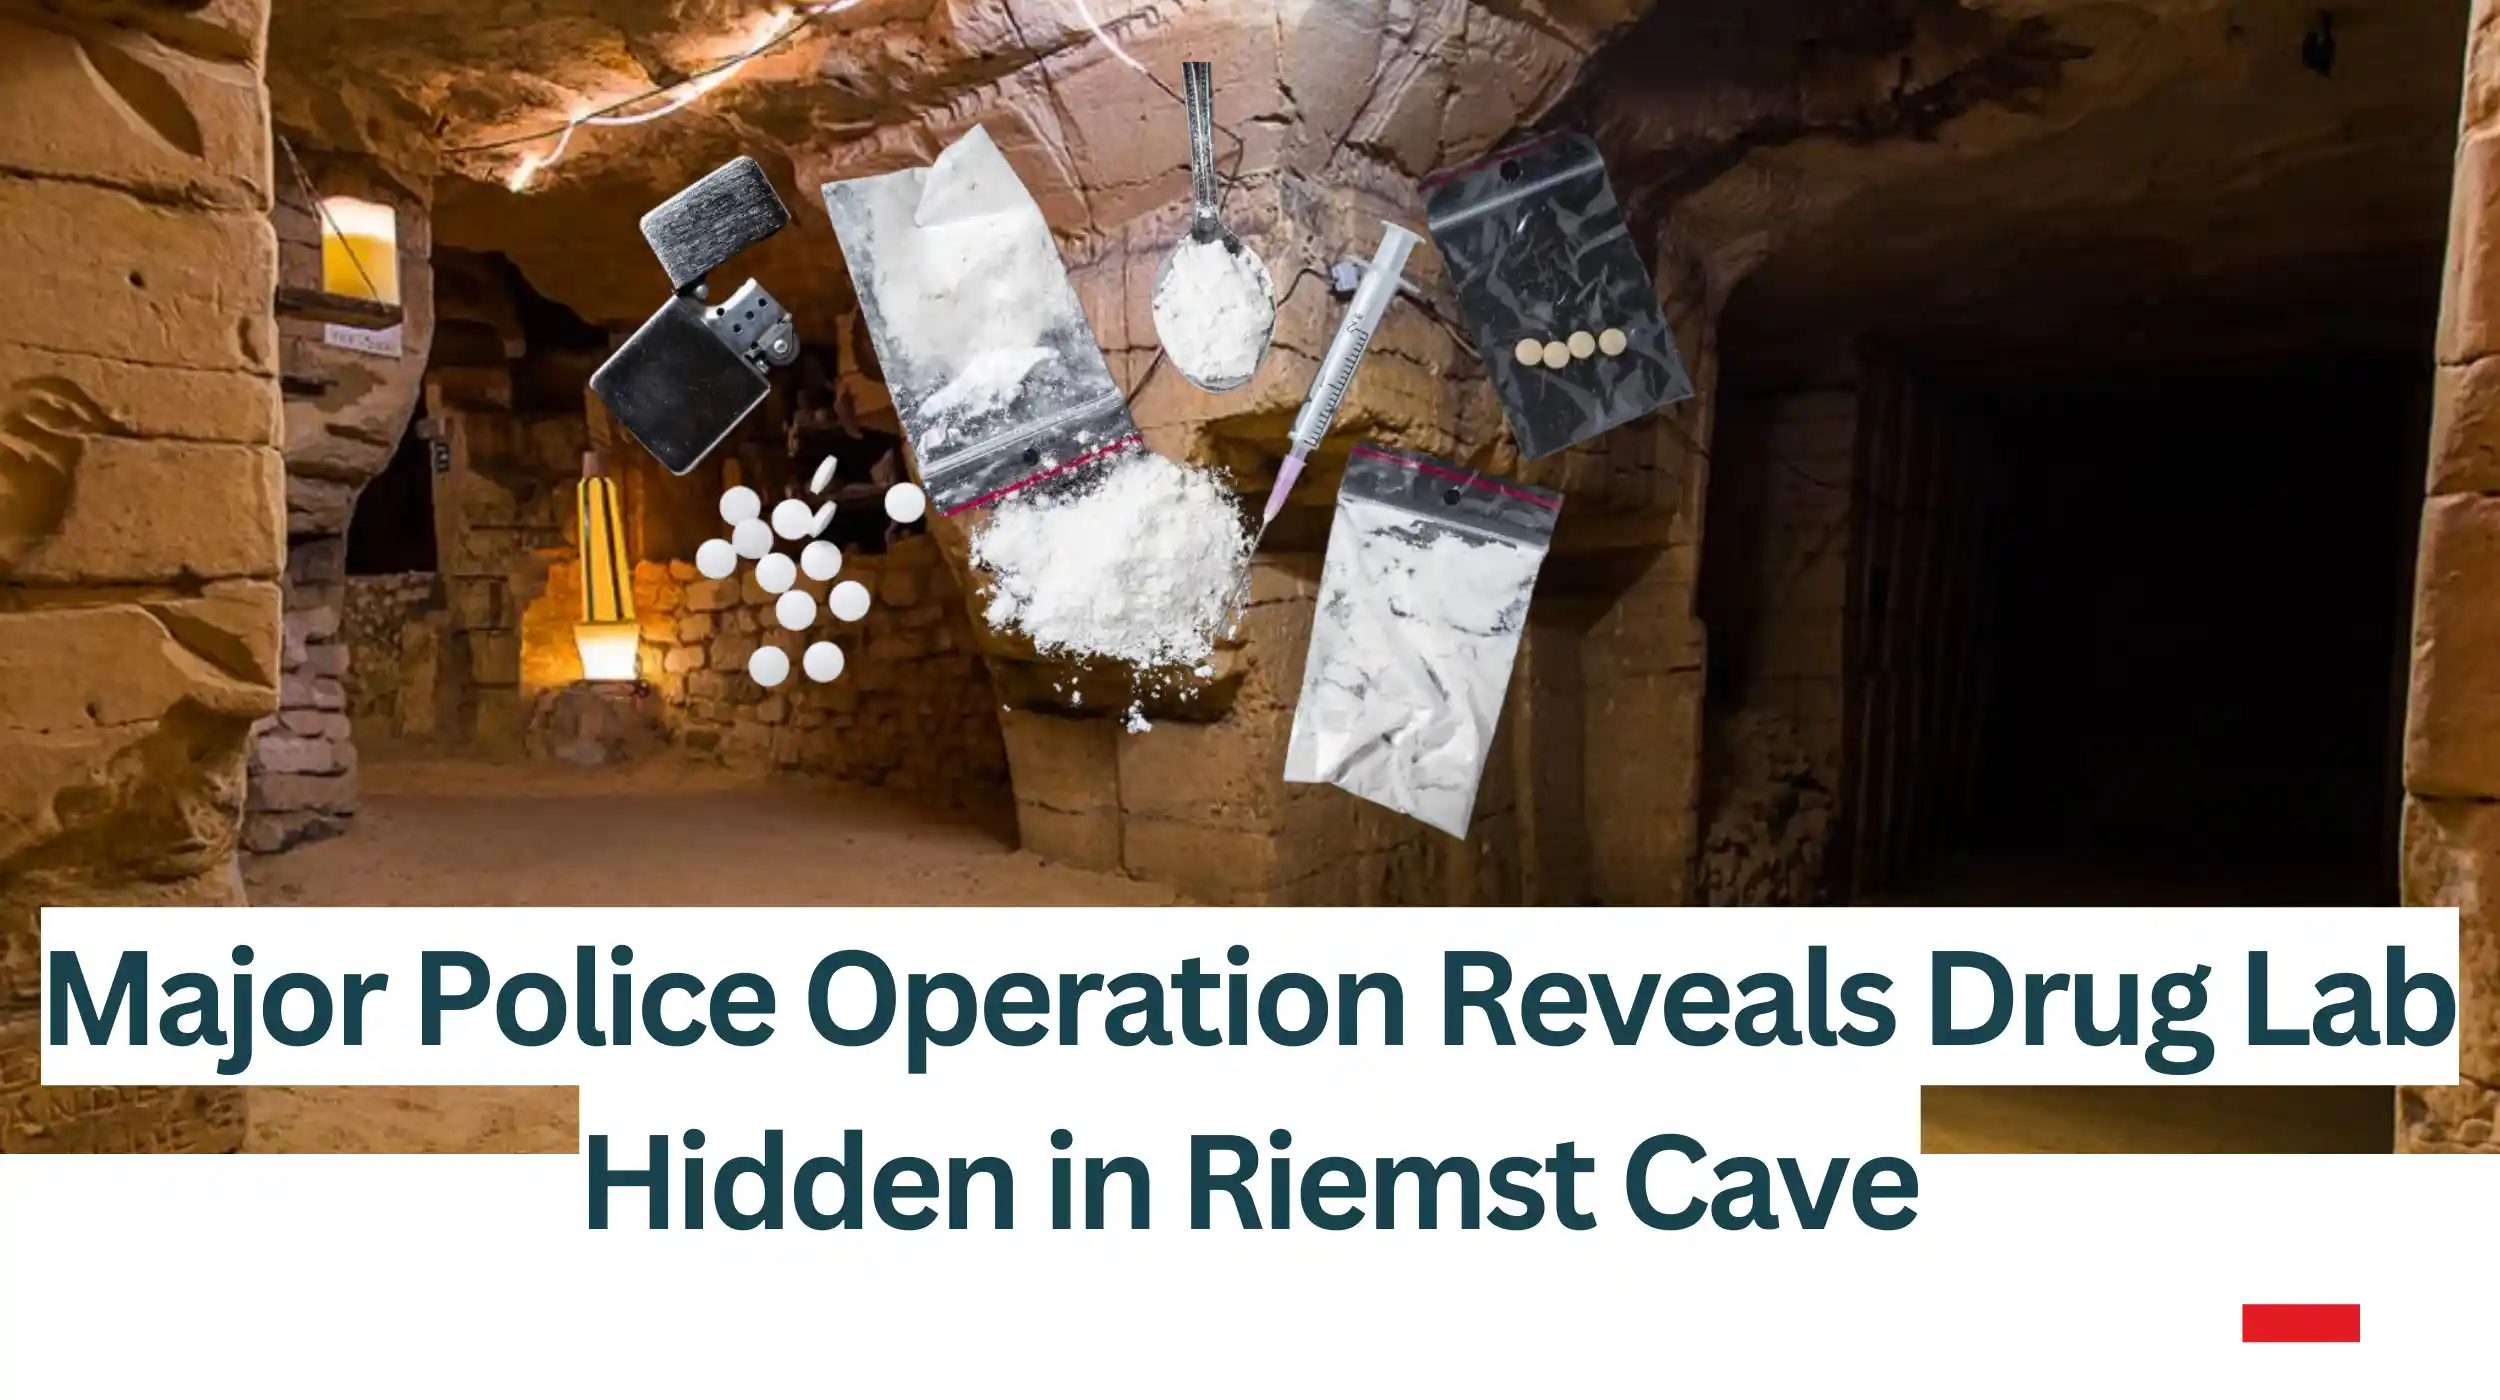 Major-Police-Operation-Reveals-Drug-Lab-Hidden-in-Riemst-Cave